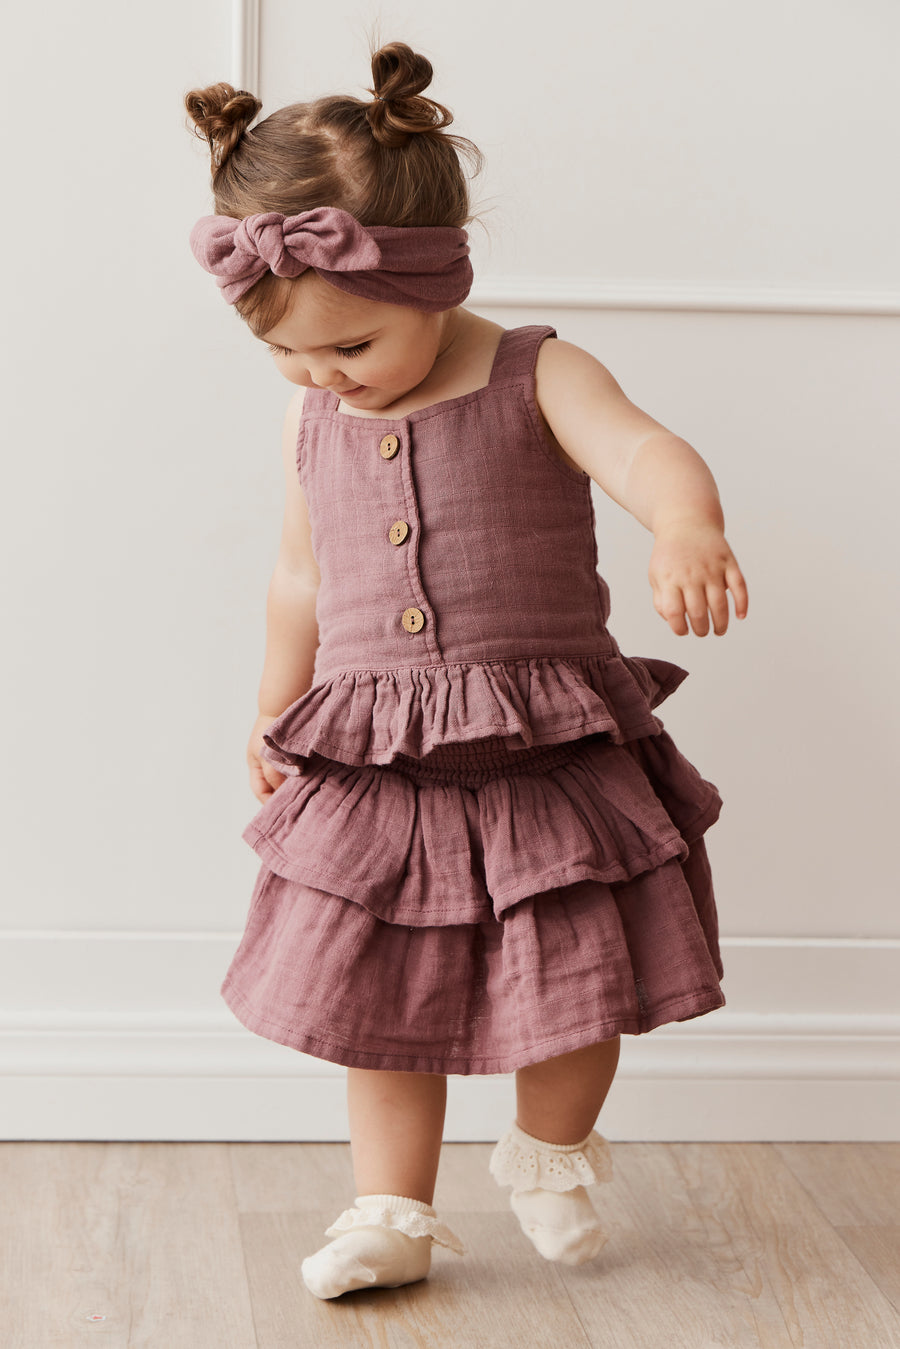 Organic Cotton Muslin Samantha Skirt- Twilight Childrens Skirt from Jamie Kay NZ